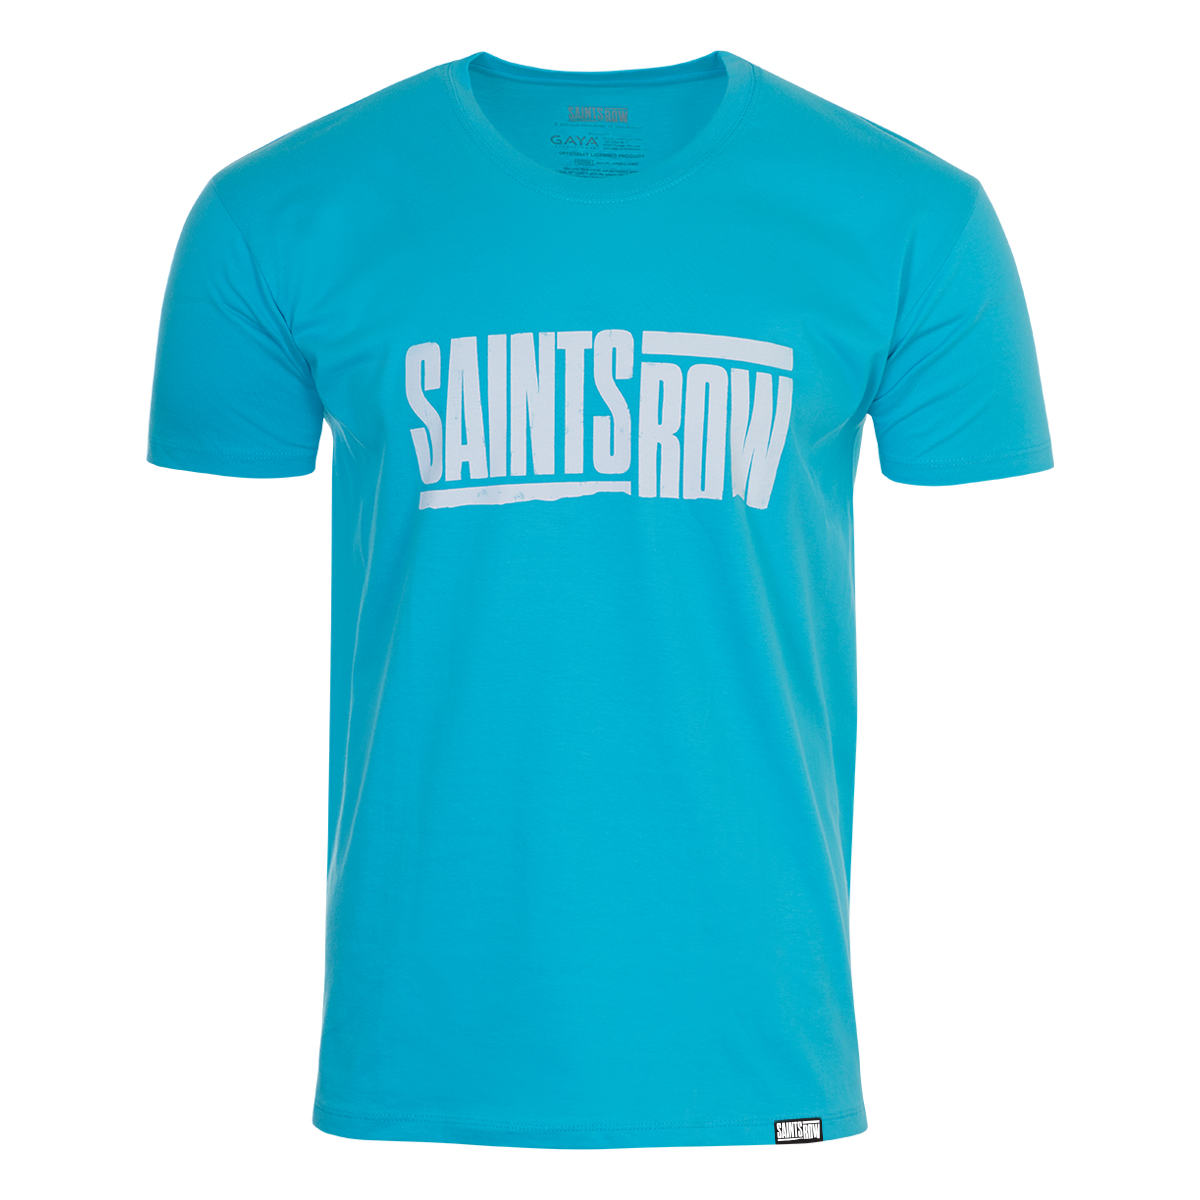 Saints Row T-Shirt Logo Blue Cover